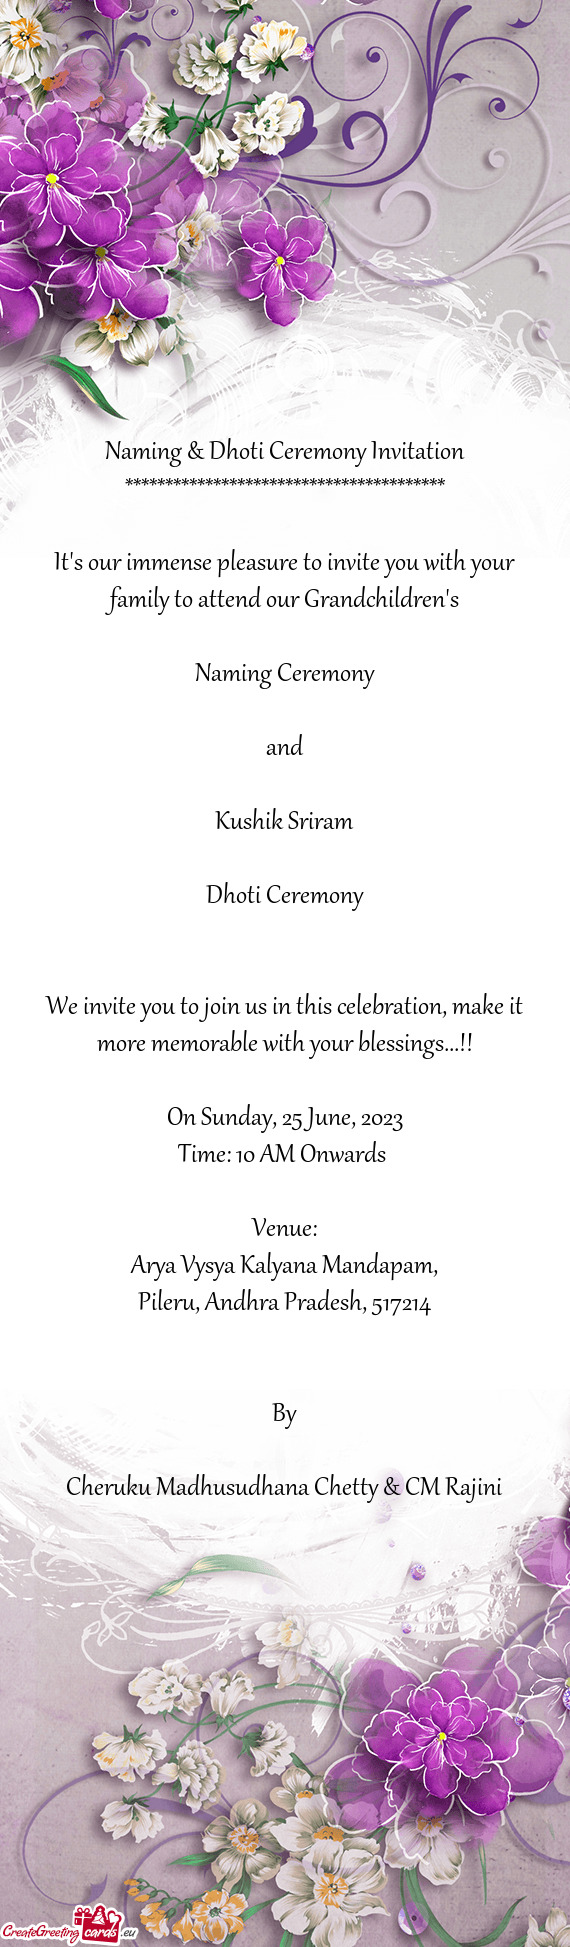 Naming & Dhoti Ceremony Invitation